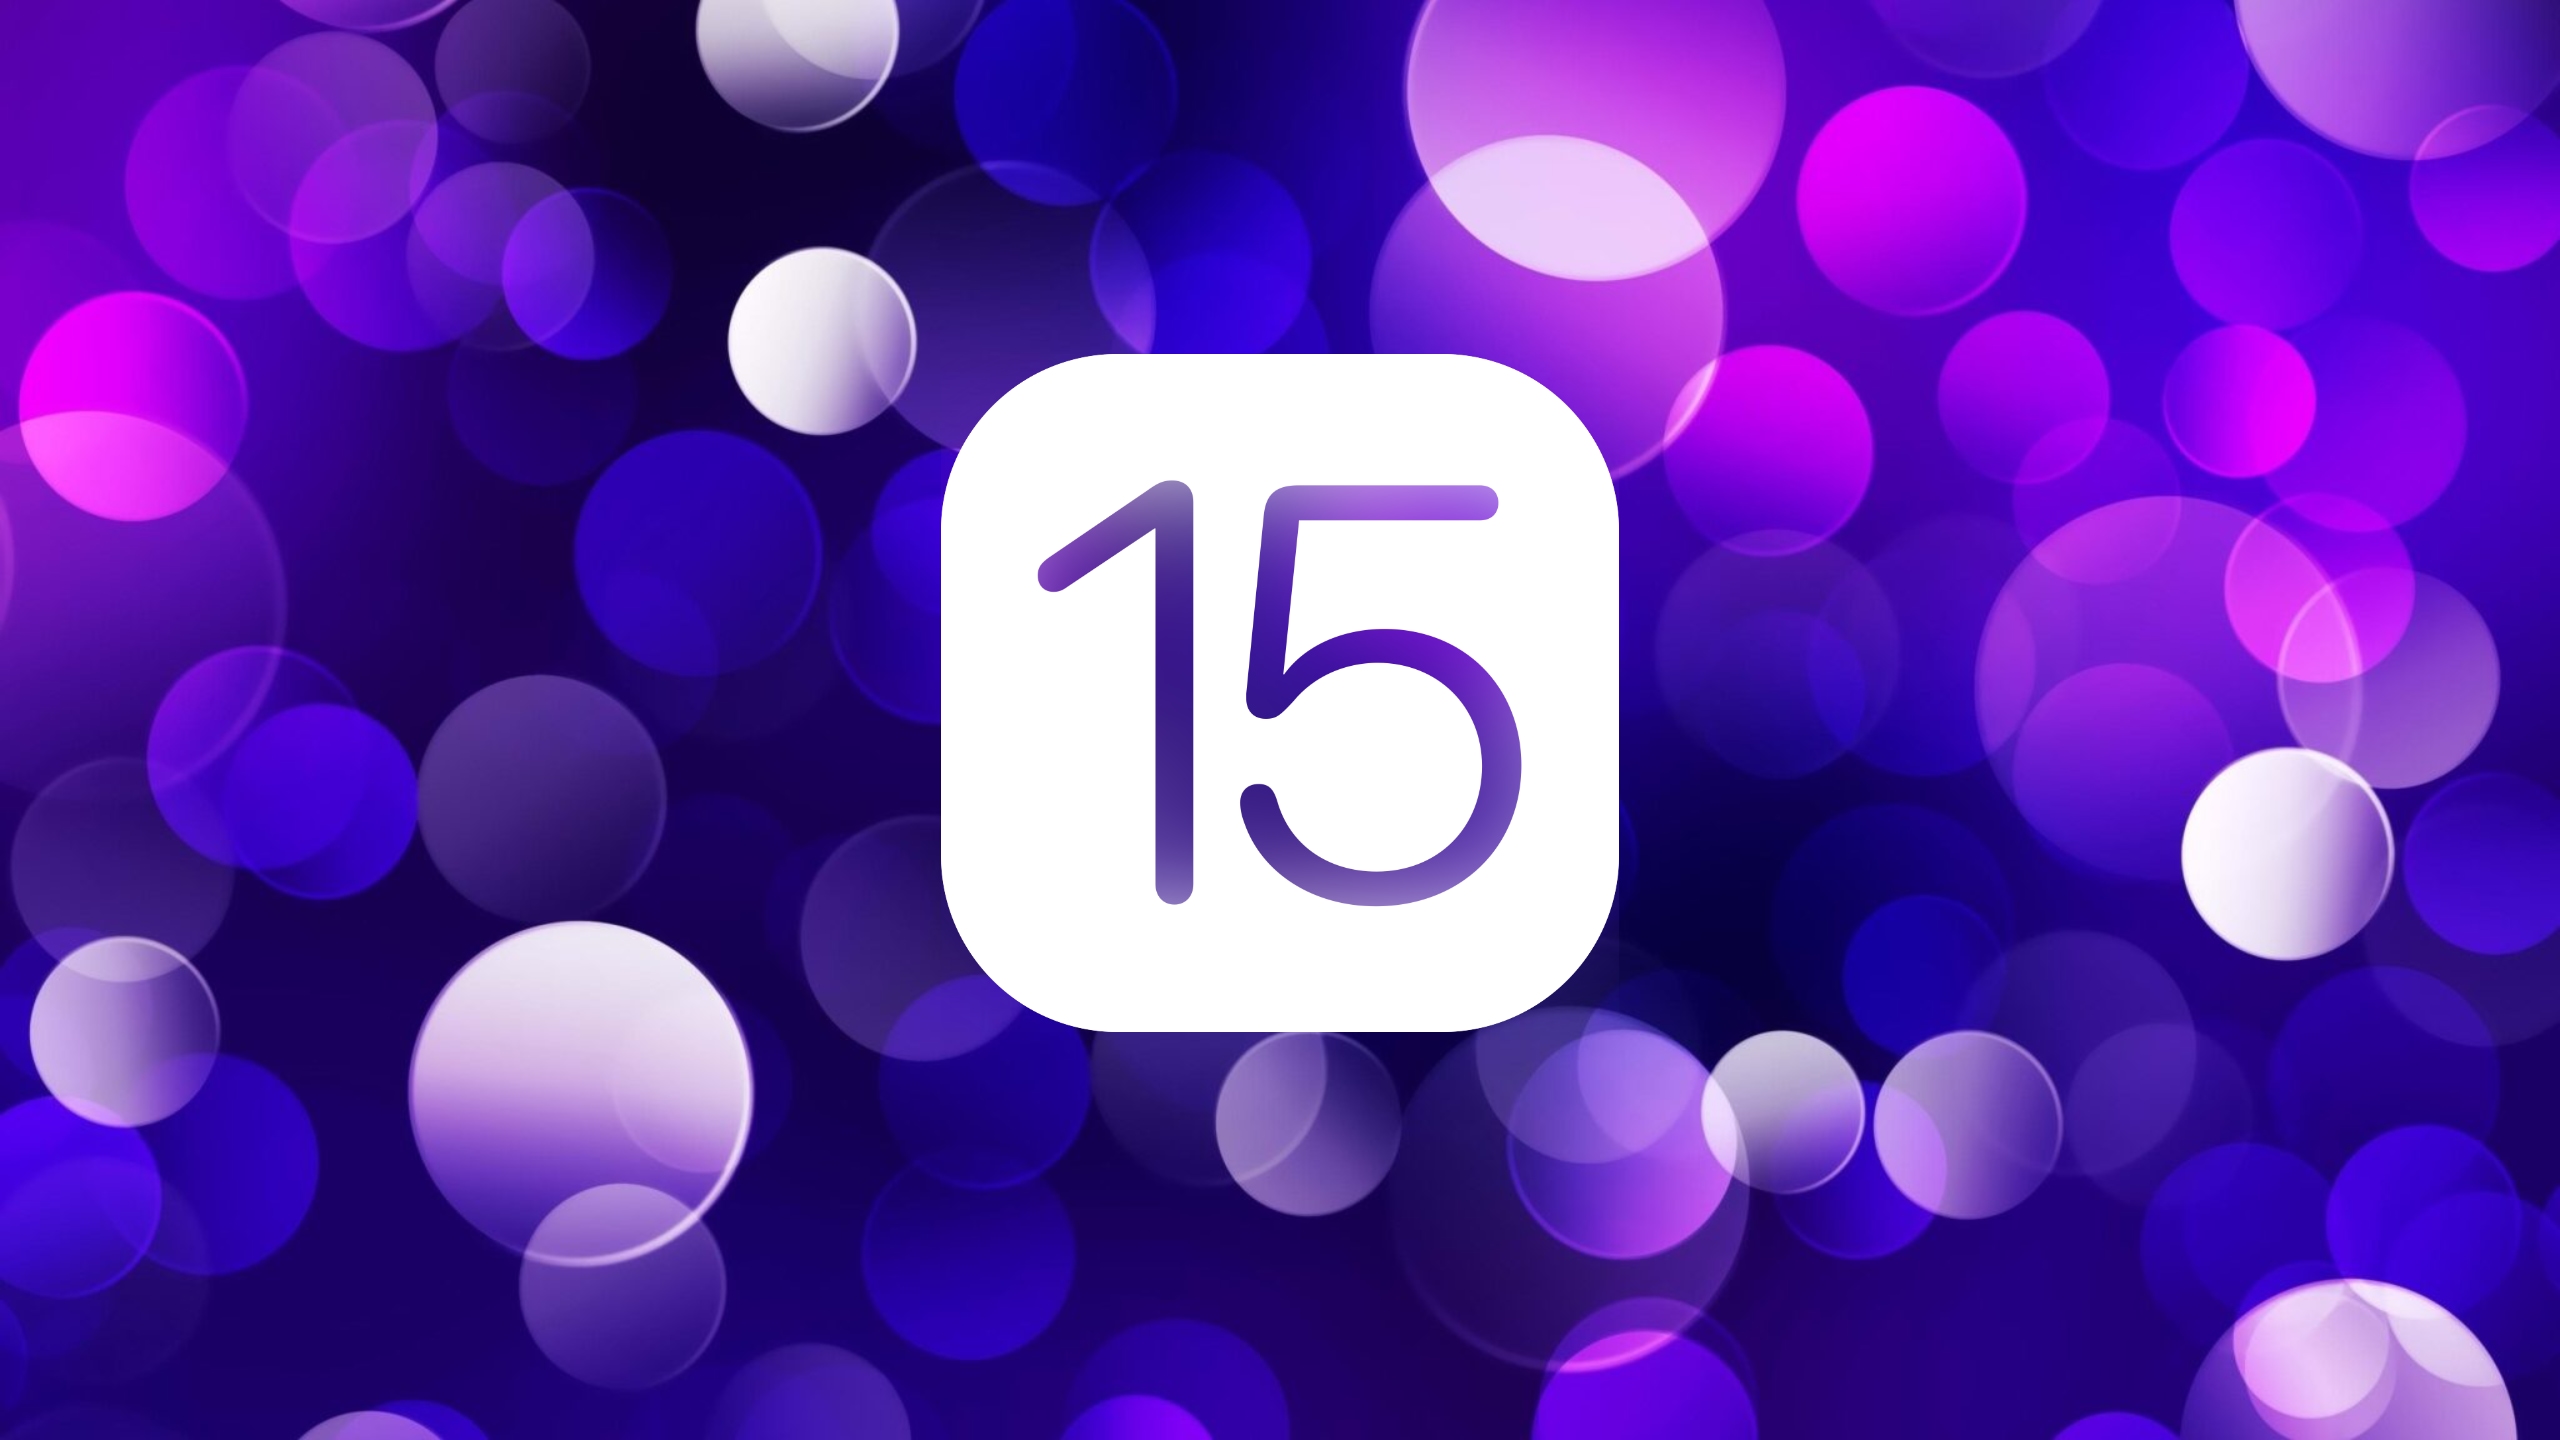 Iphone 15 wallpapers. Айос 15. Обои иос 15,3. IOS 15 logo. IOS 15 Wallpapers.